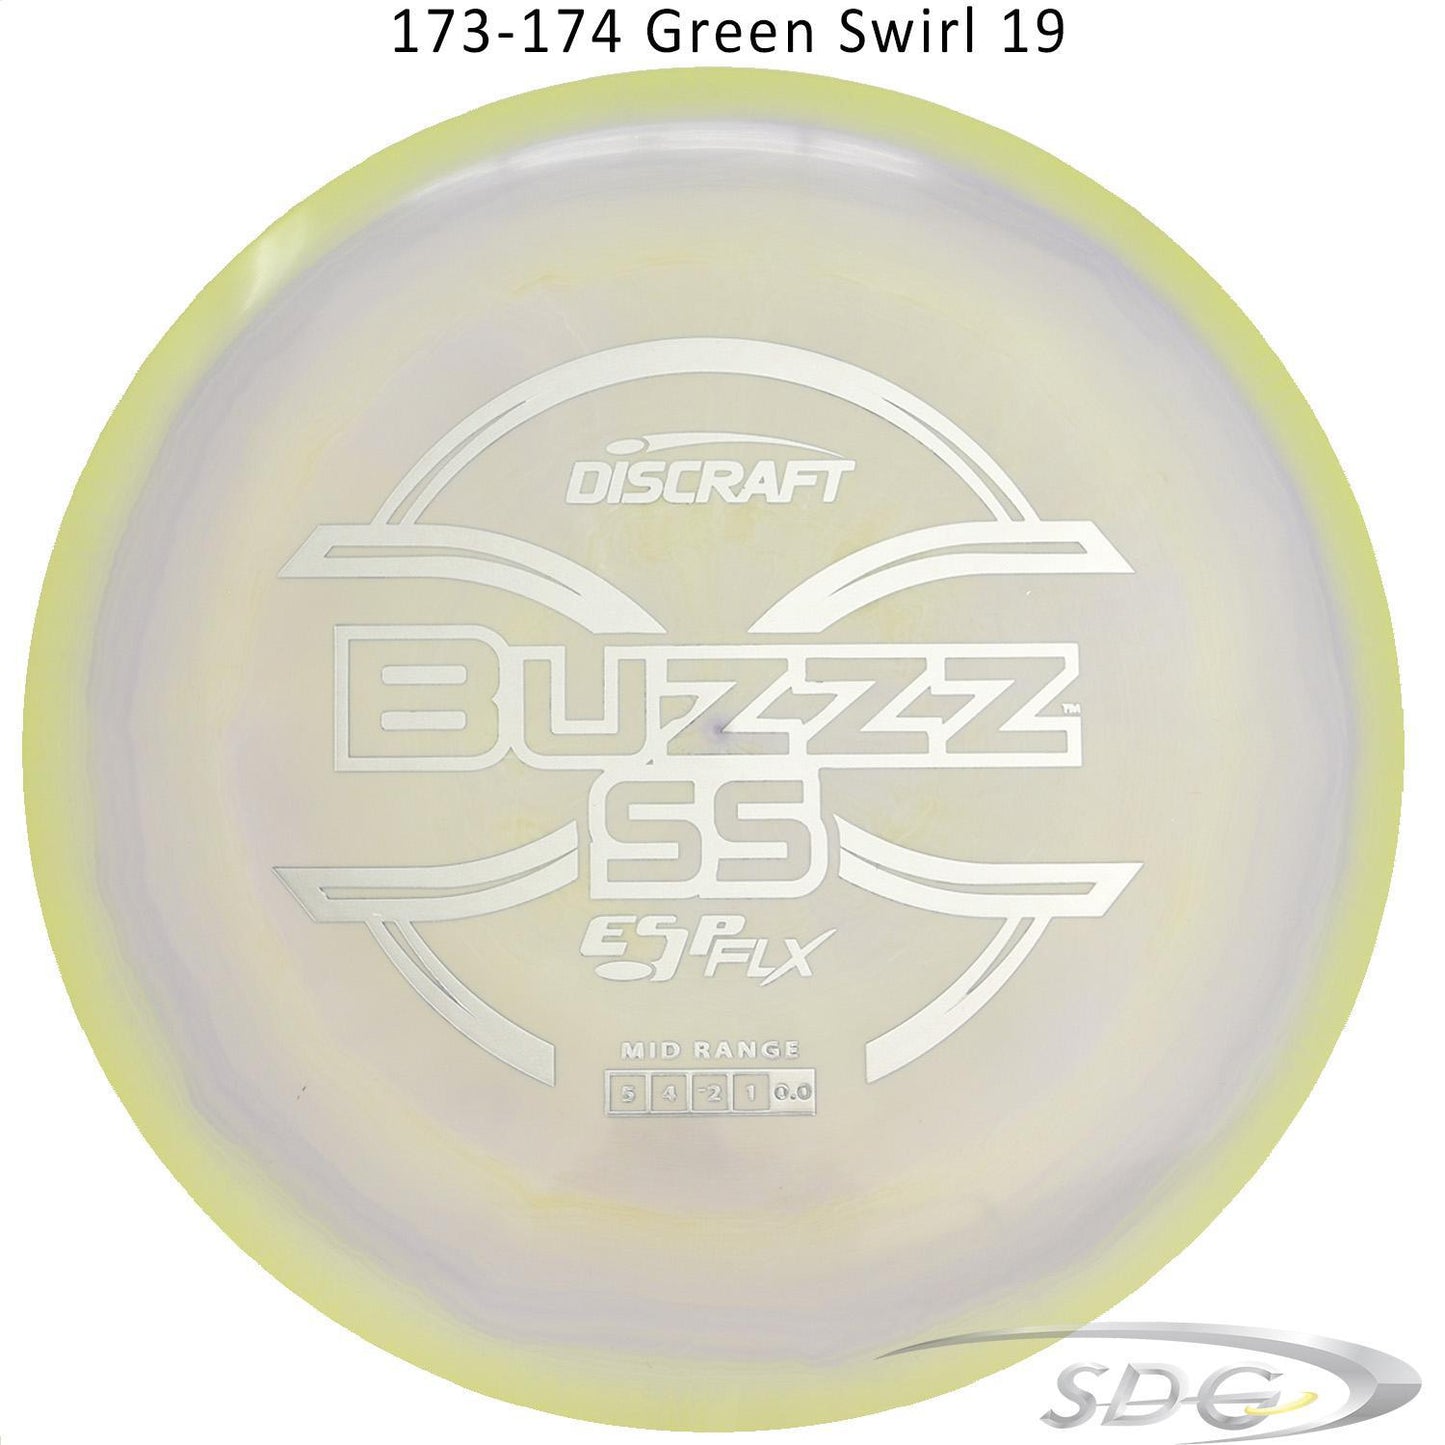 discraft-esp-flx-buzzz-ss-disc-golf-mid-range 173-174 Green Swirl 19